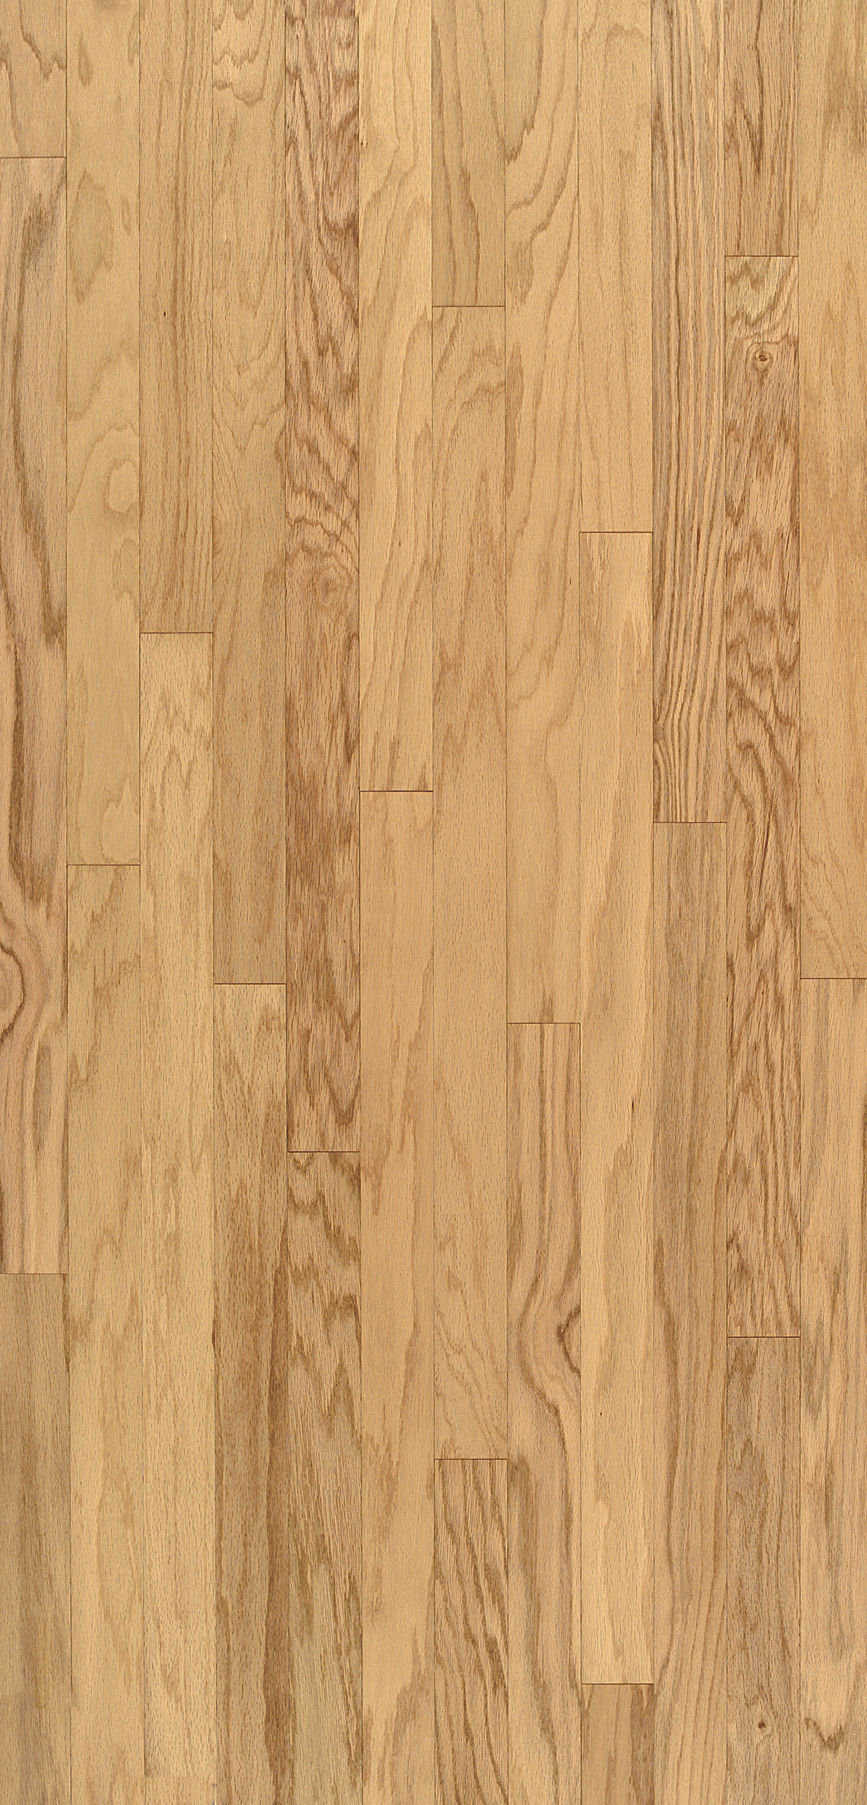 Natural Oak 5" - Turlington Lock&Fold Collection - Engineered Hardwood Flooring by Bruce